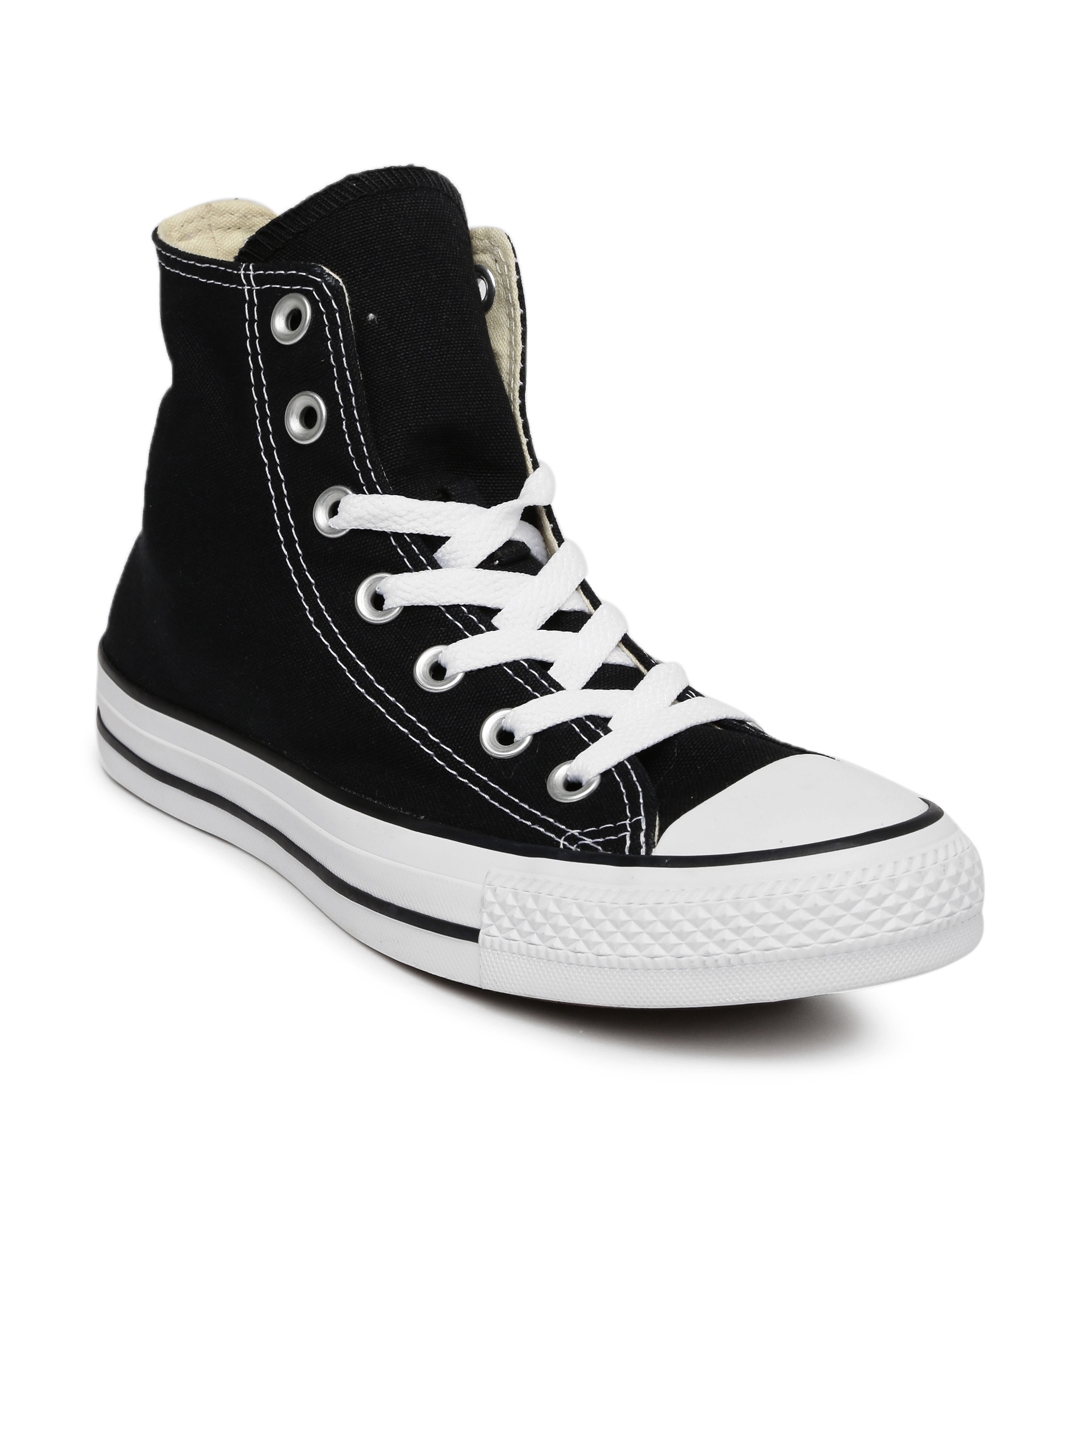 Buy Bacca Bucci Men Black Sneakers - Casual Shoes for Men 10705780 | Myntra